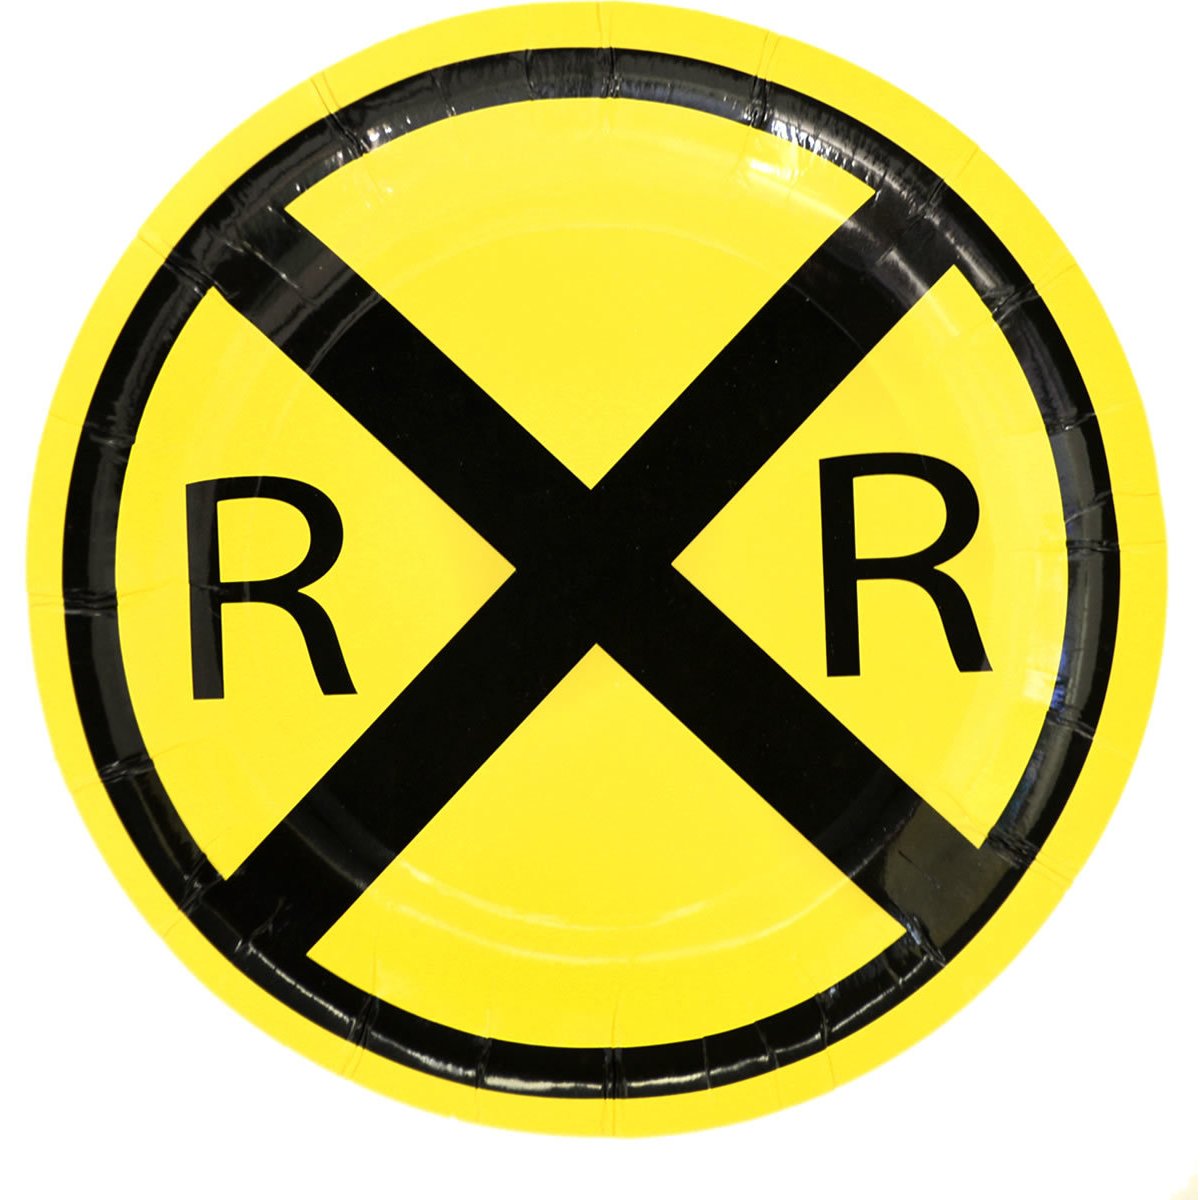 Rocky Railway VBS Decor Ideas #VBS #RockyRailway #trains